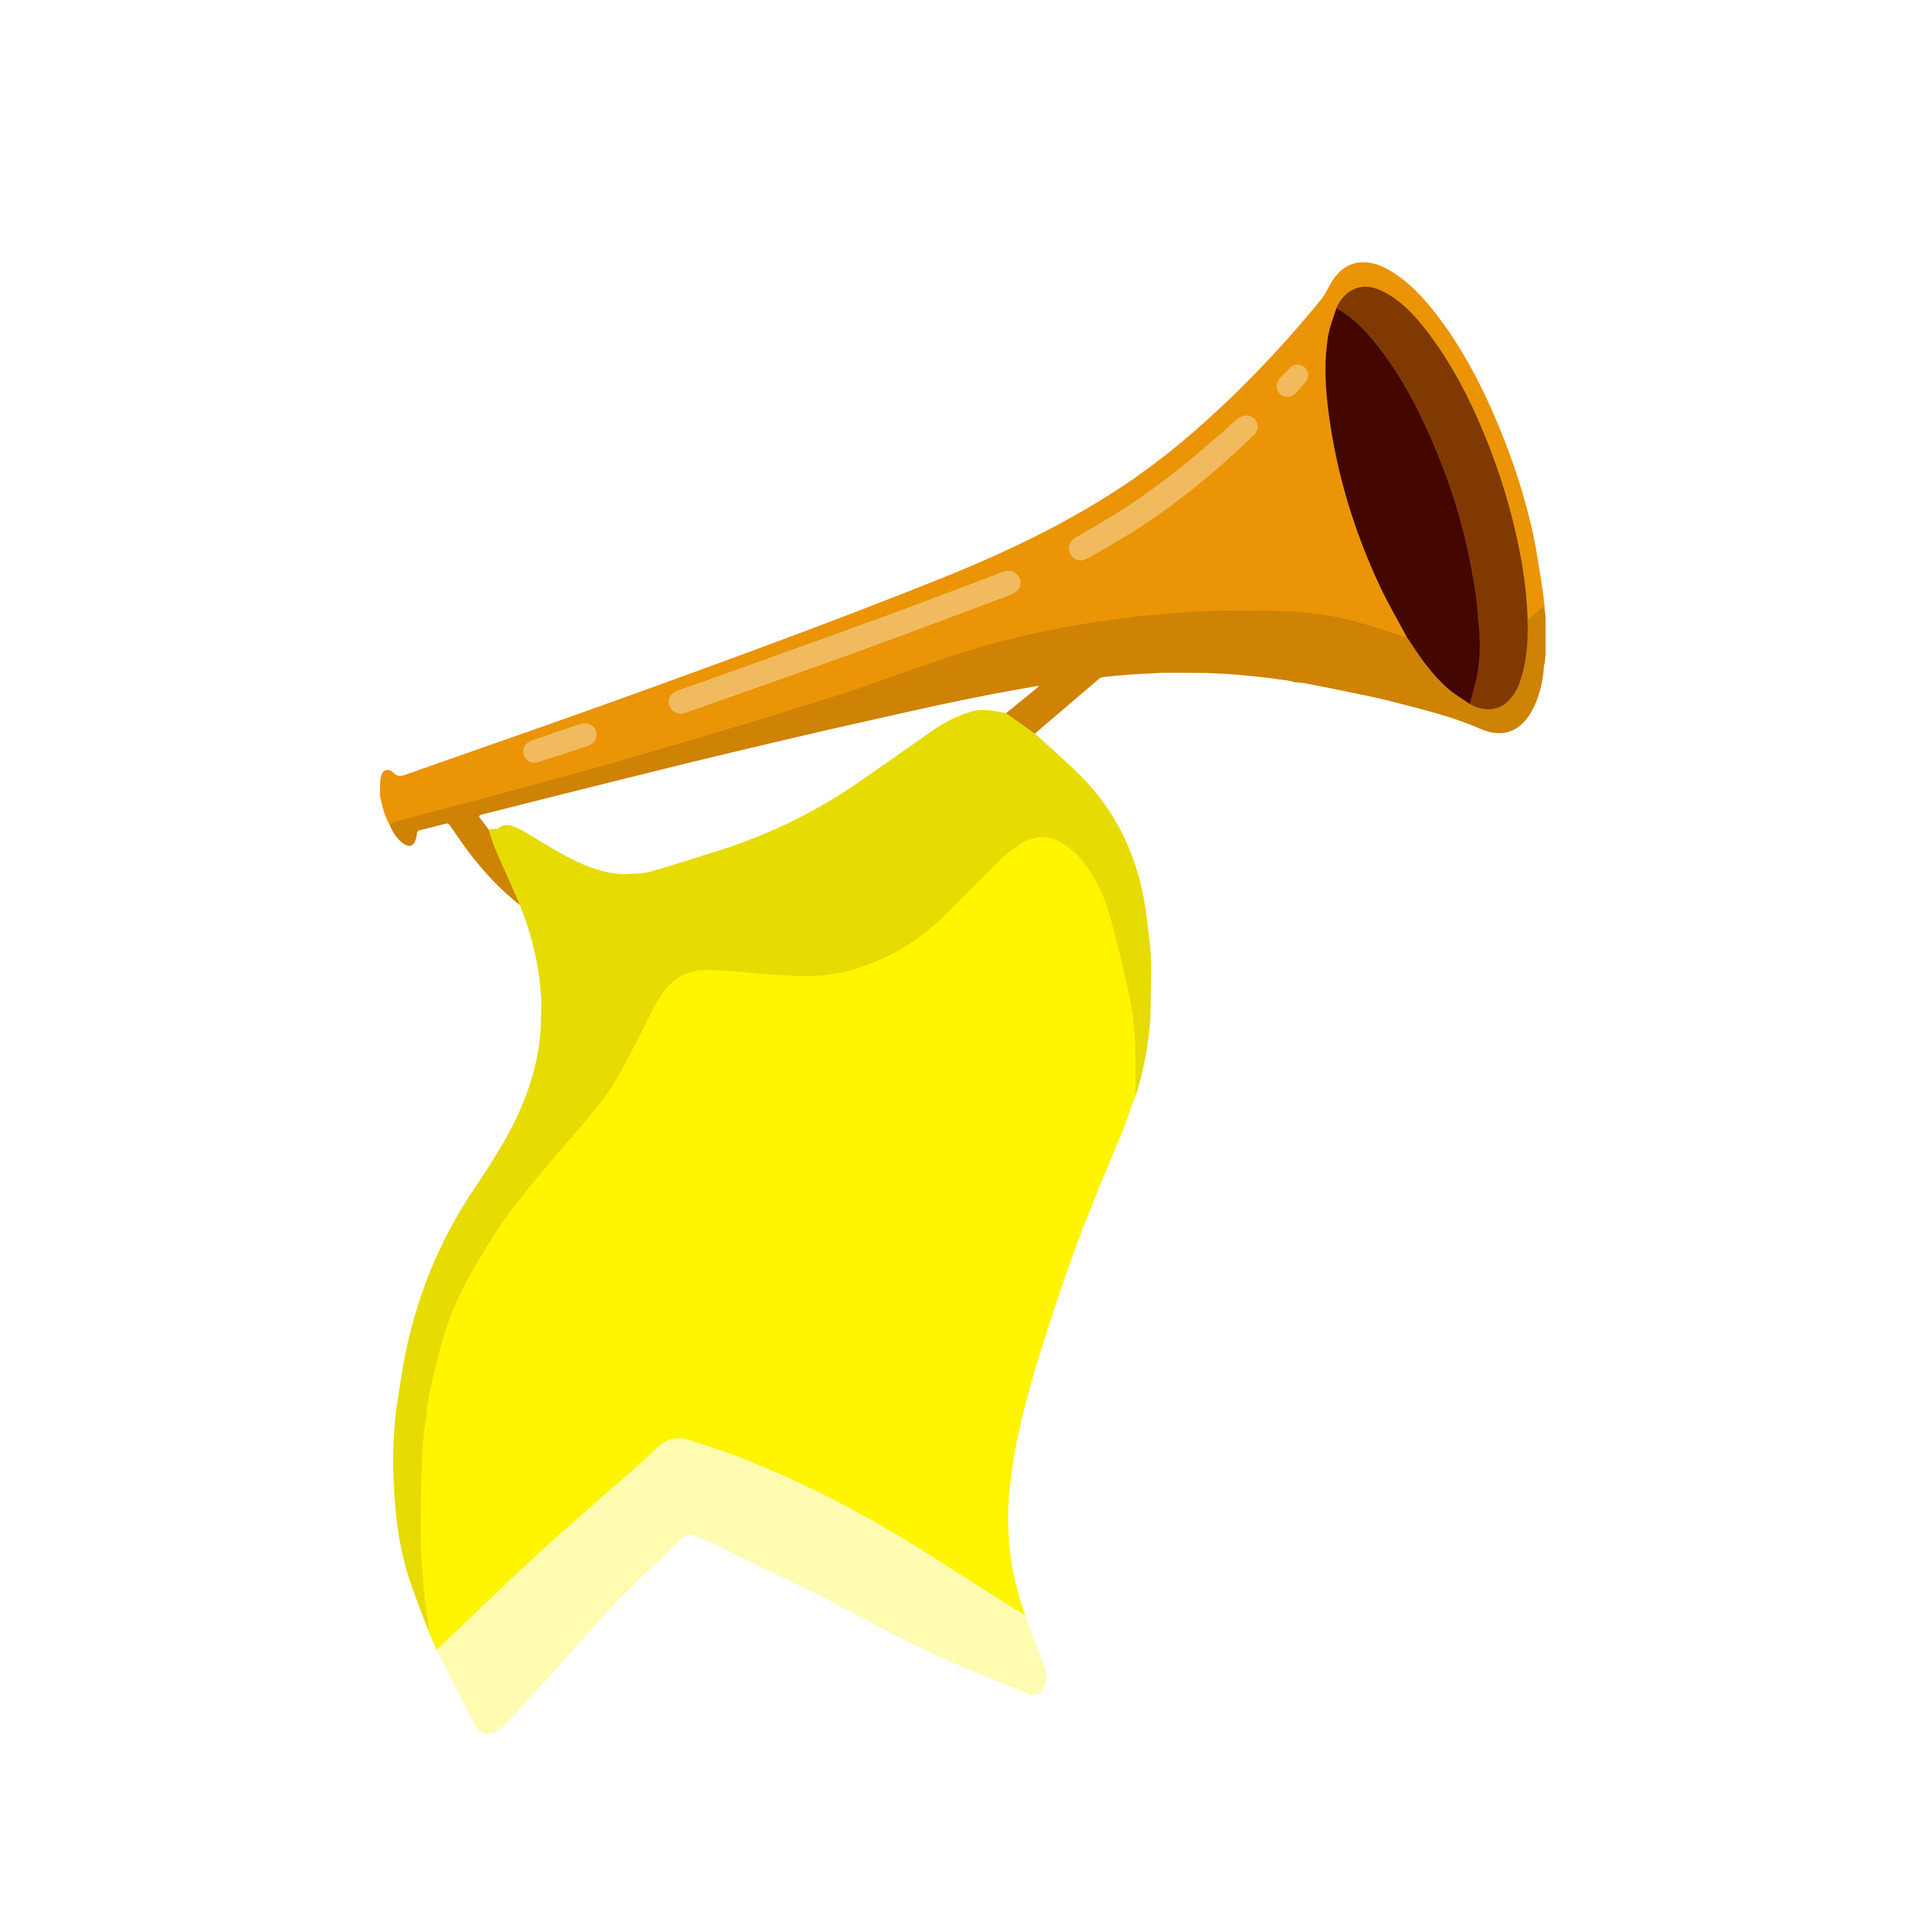 Trumpet. Musical instrument. Golden horn with yellow flag. Solemn